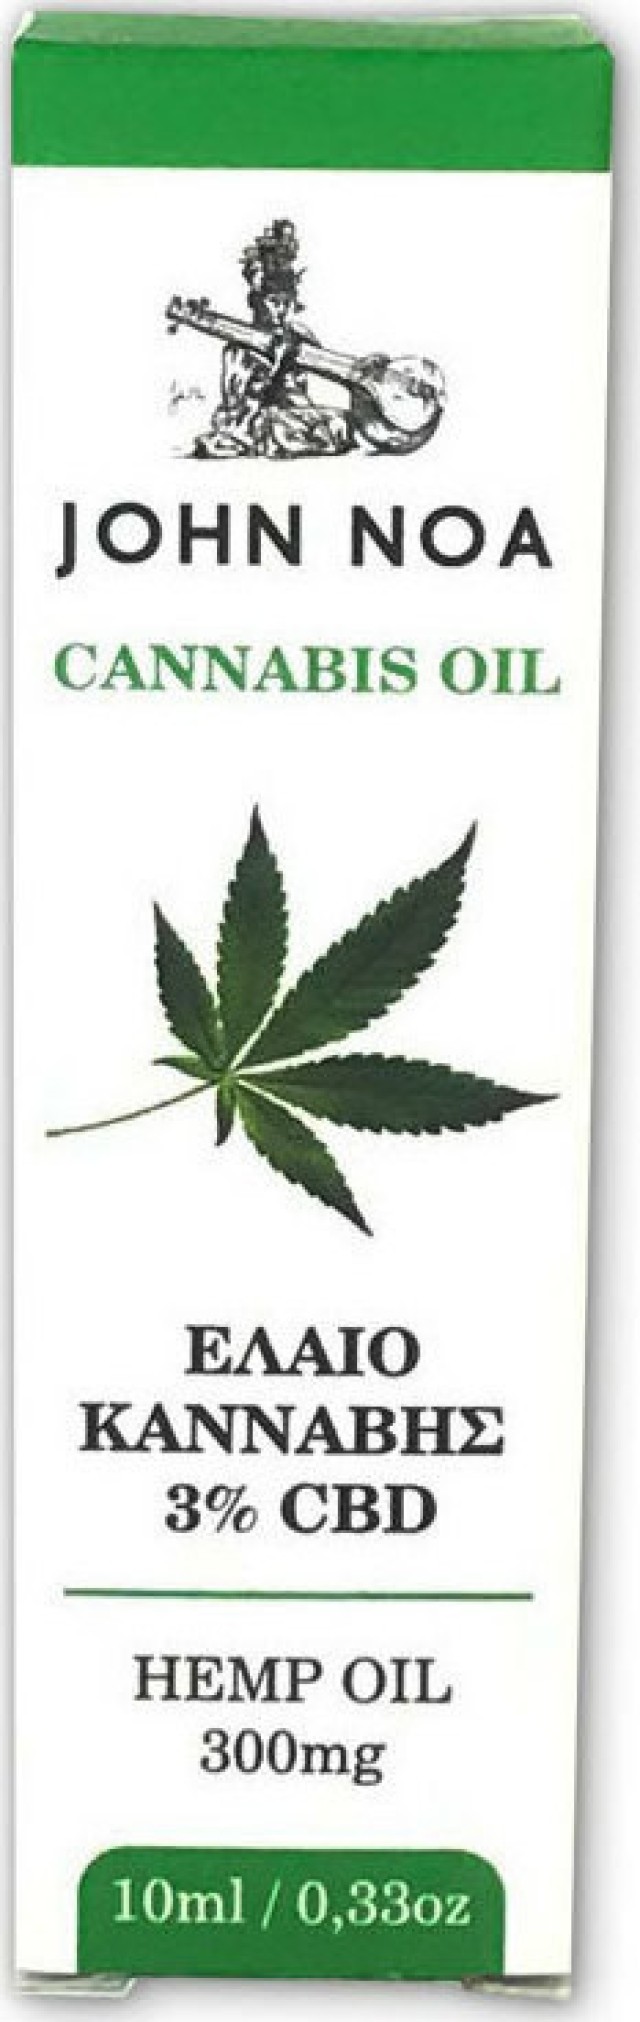 John Noa Cannabis Oil 3% CBD 300mg 10ml